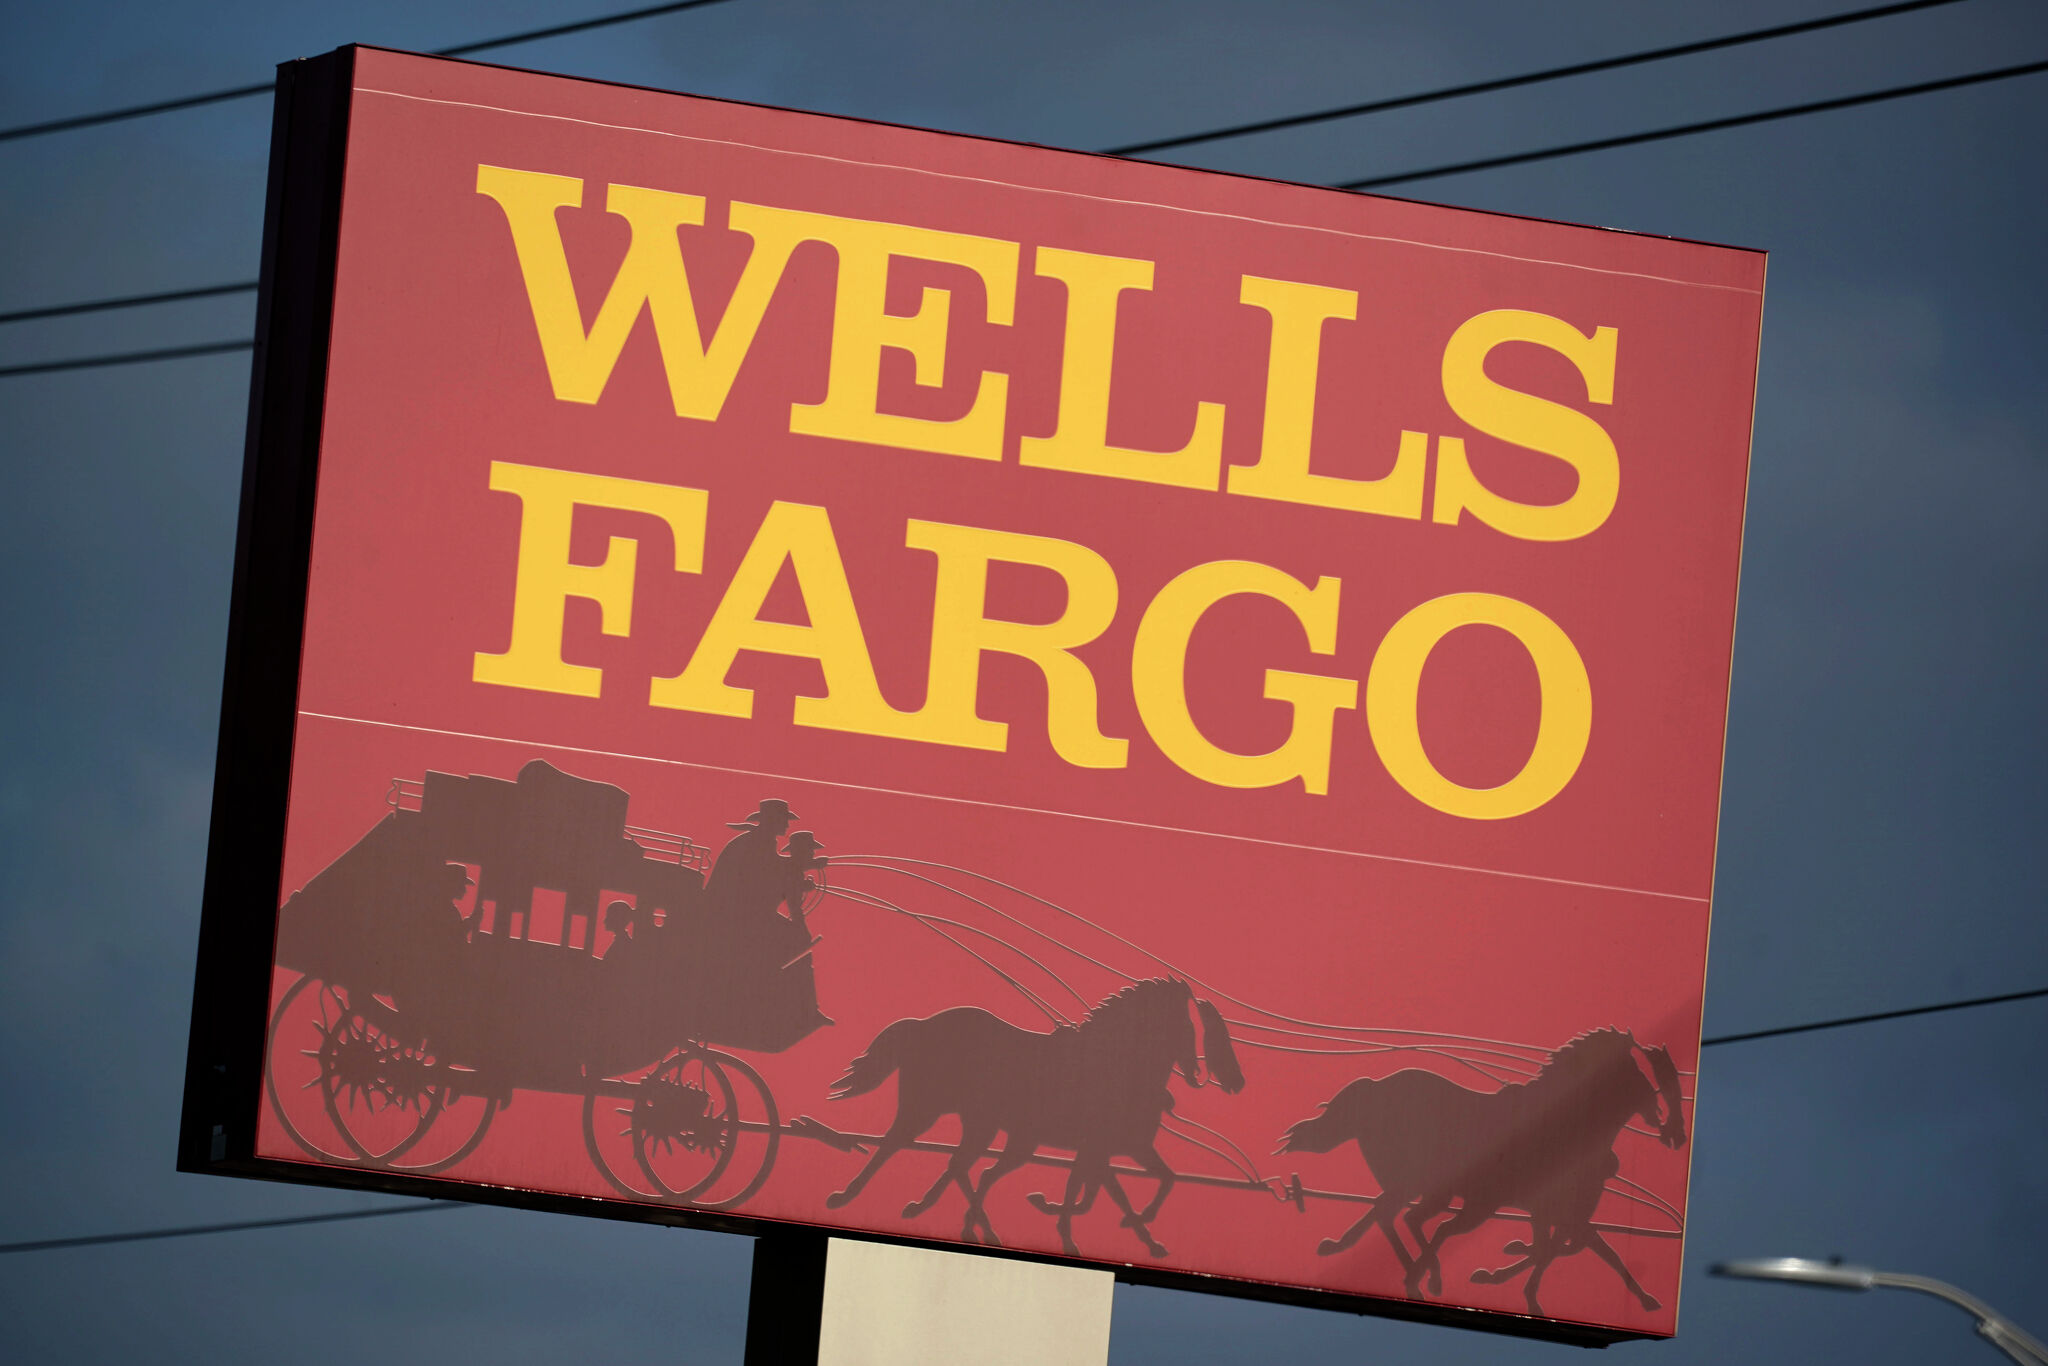 Wells Fargo to close Waterbury branch Aug. 16